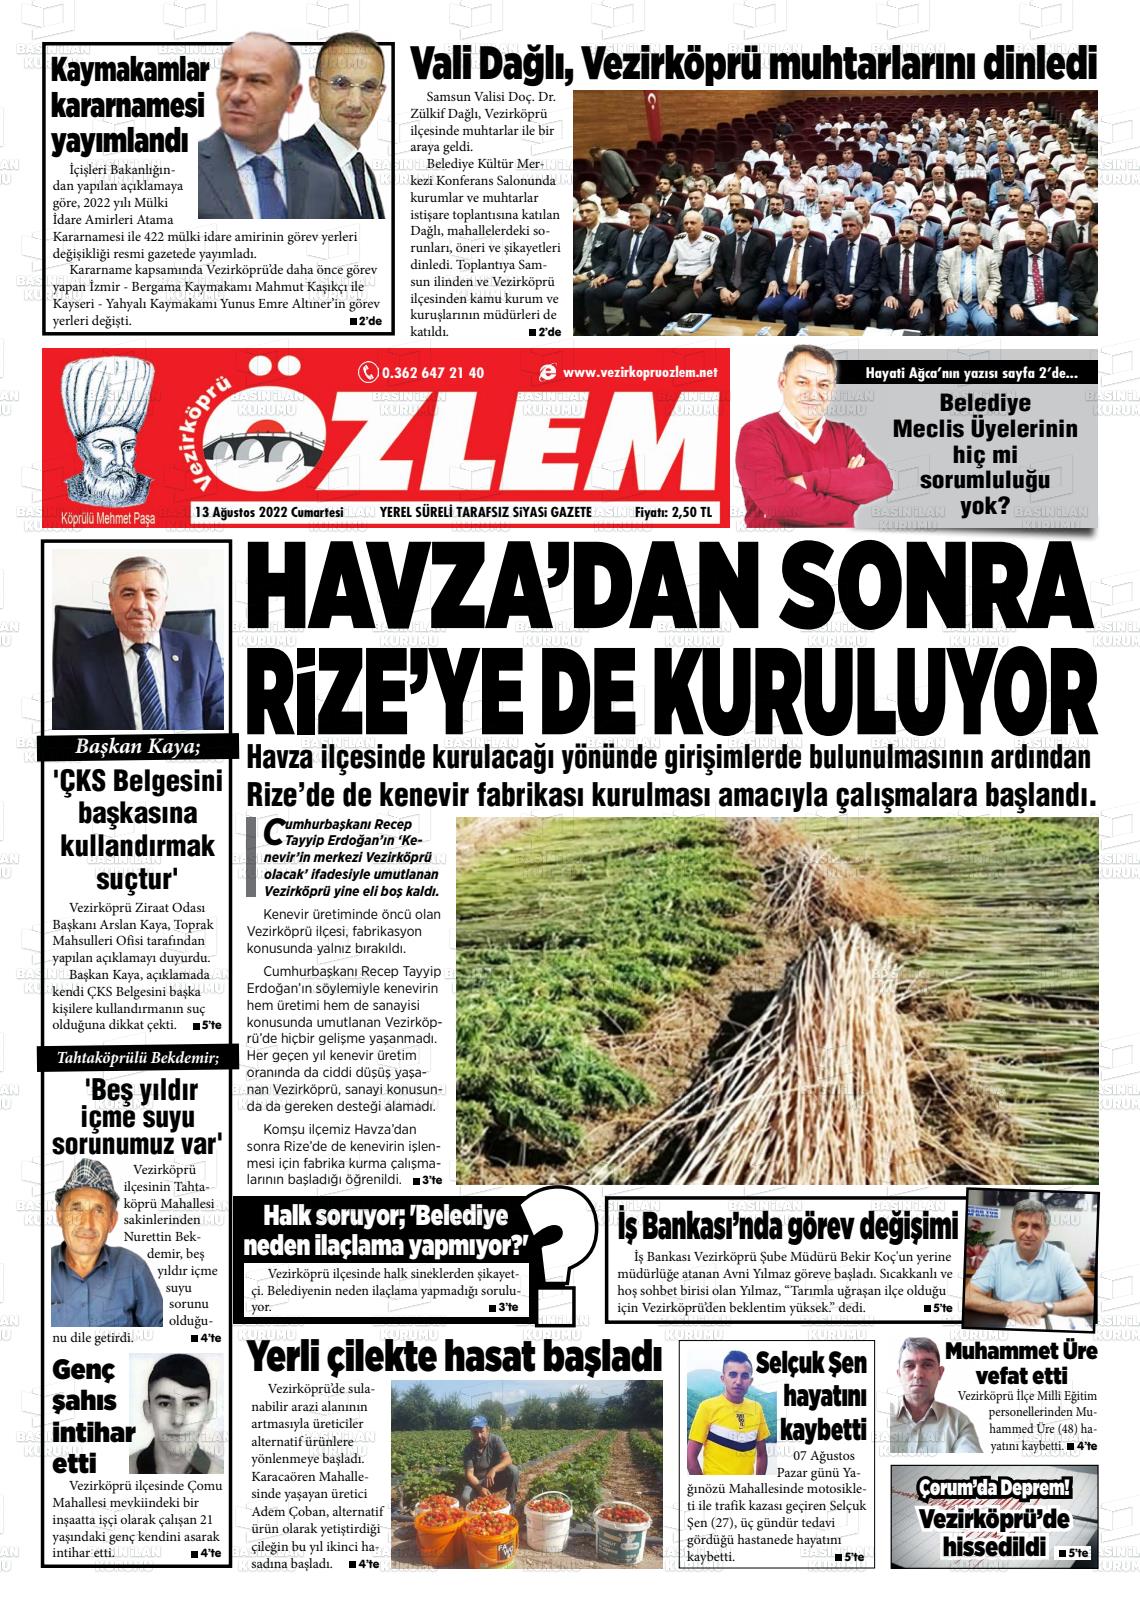 13 Ağustos 2022 Vezirköprü Özlem Gazete Manşeti